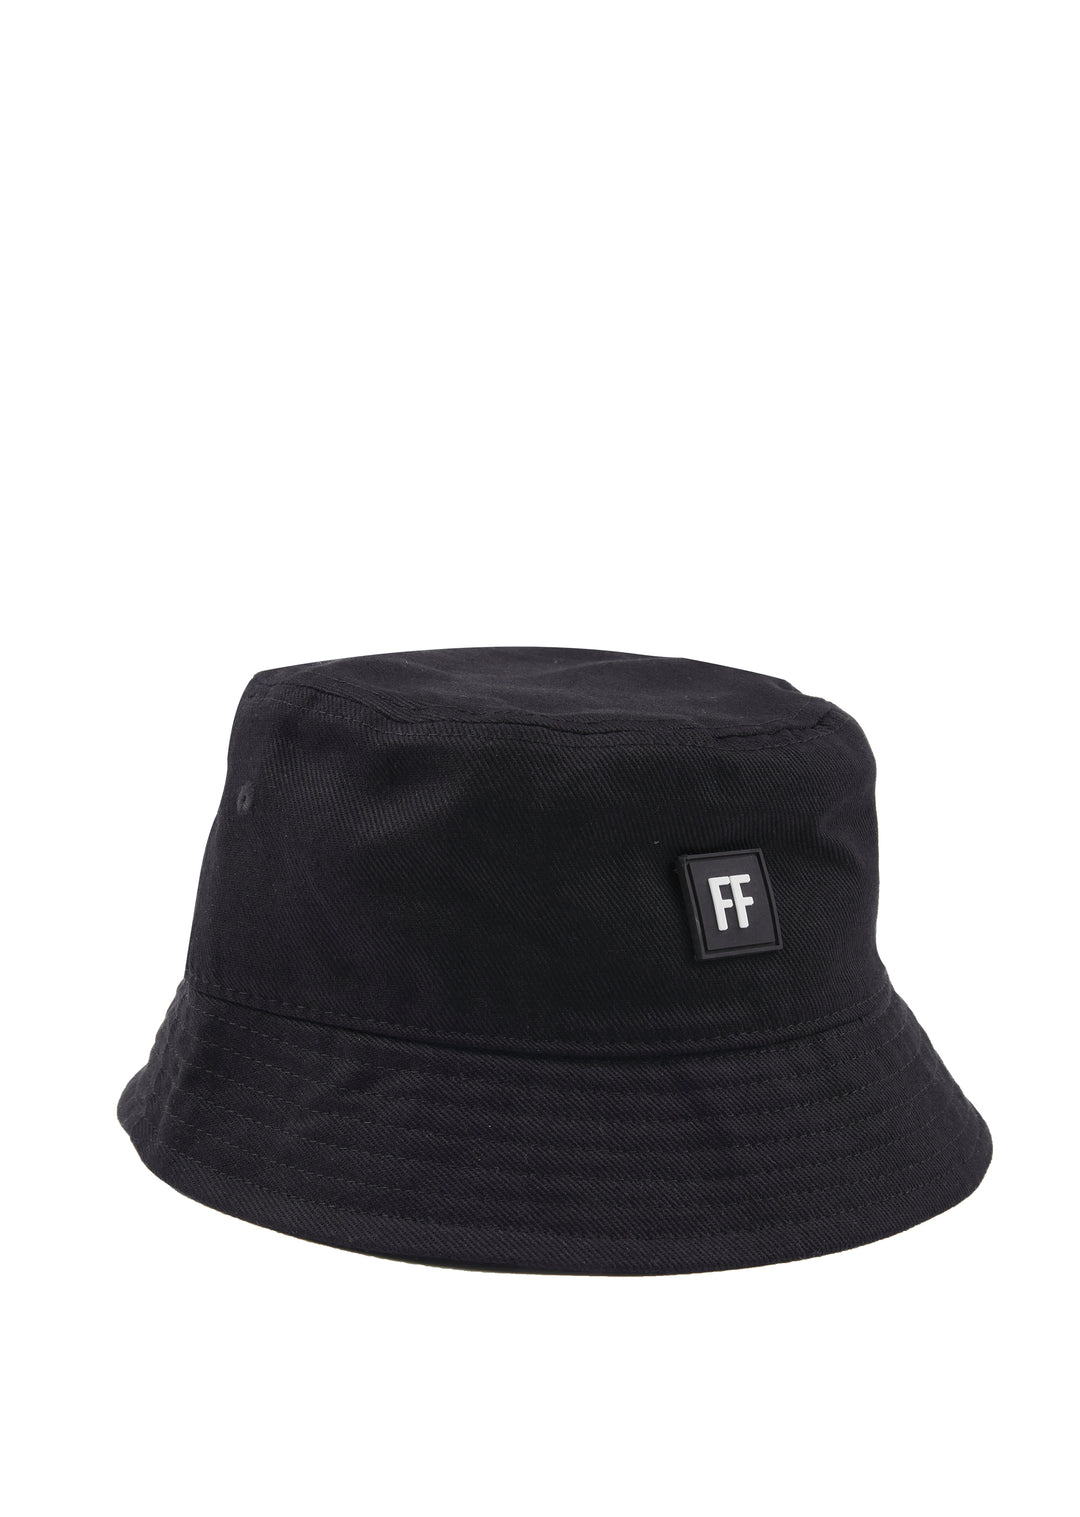 FF / Bucket Cap